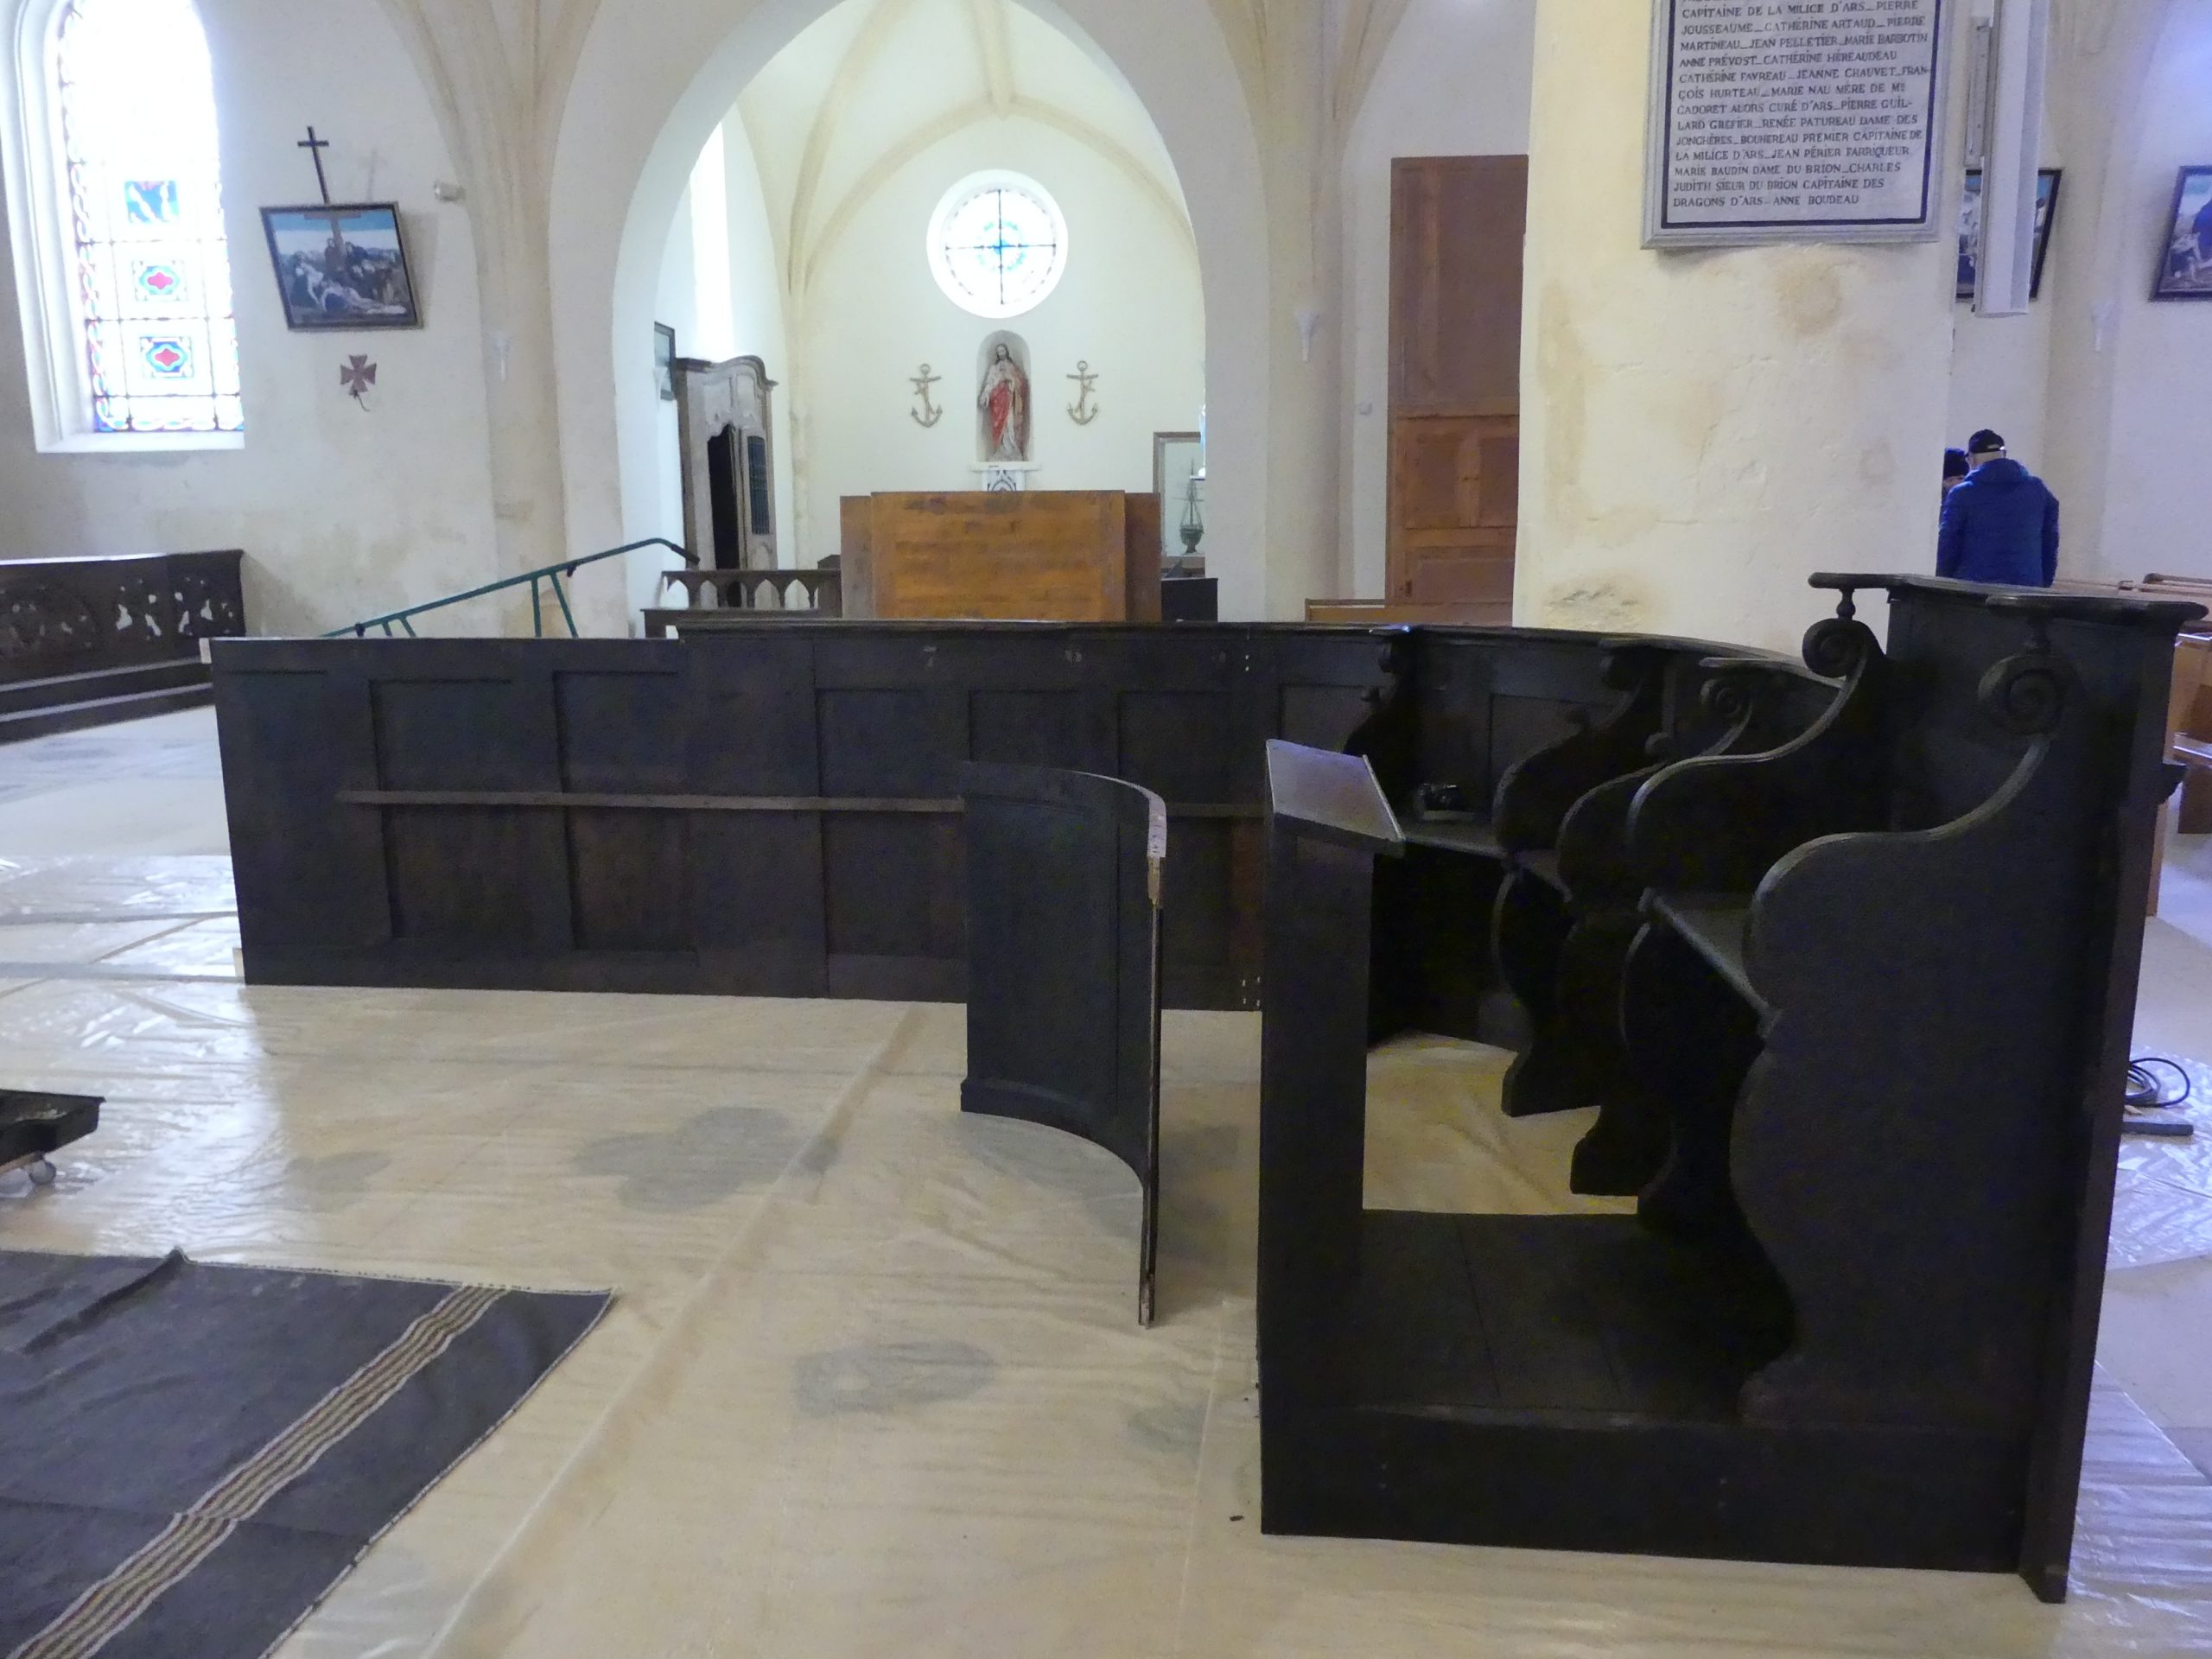 Ars - Eglise - Stales rénovées - 12 mars 2020